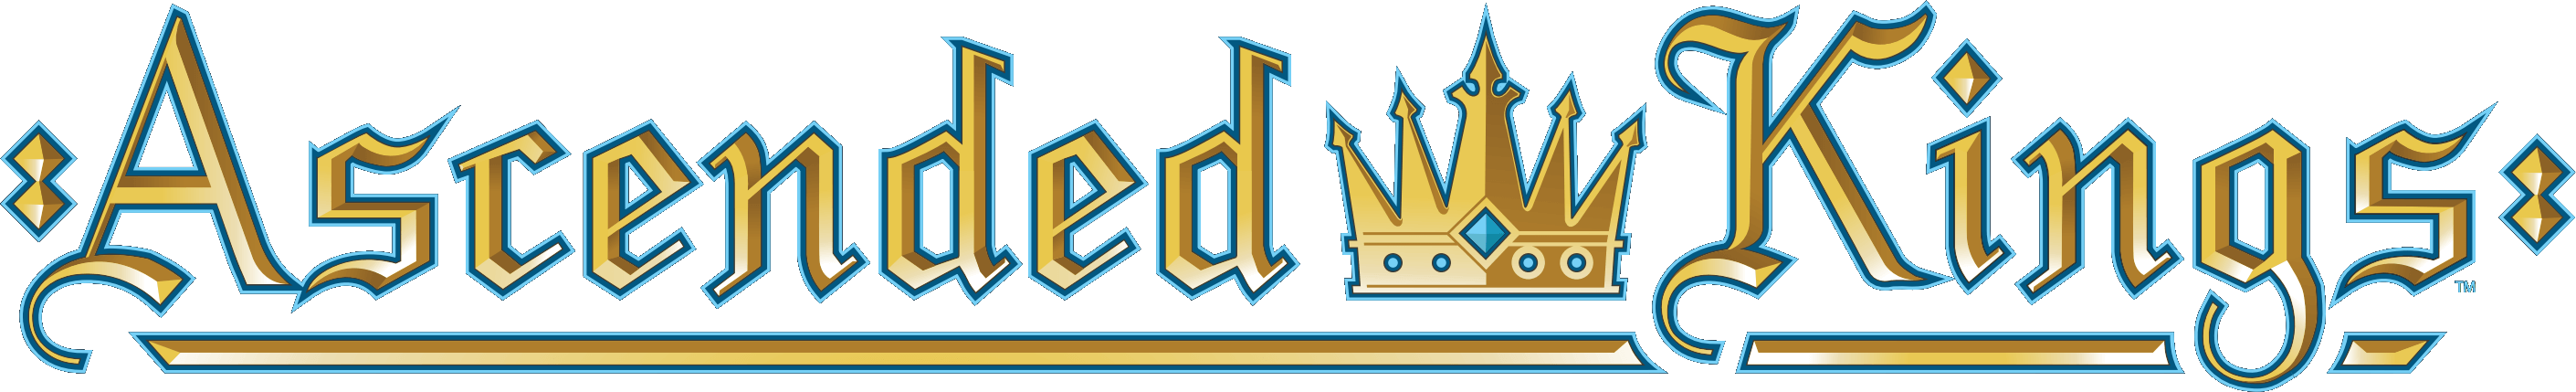 Top logo for Ascended Kings